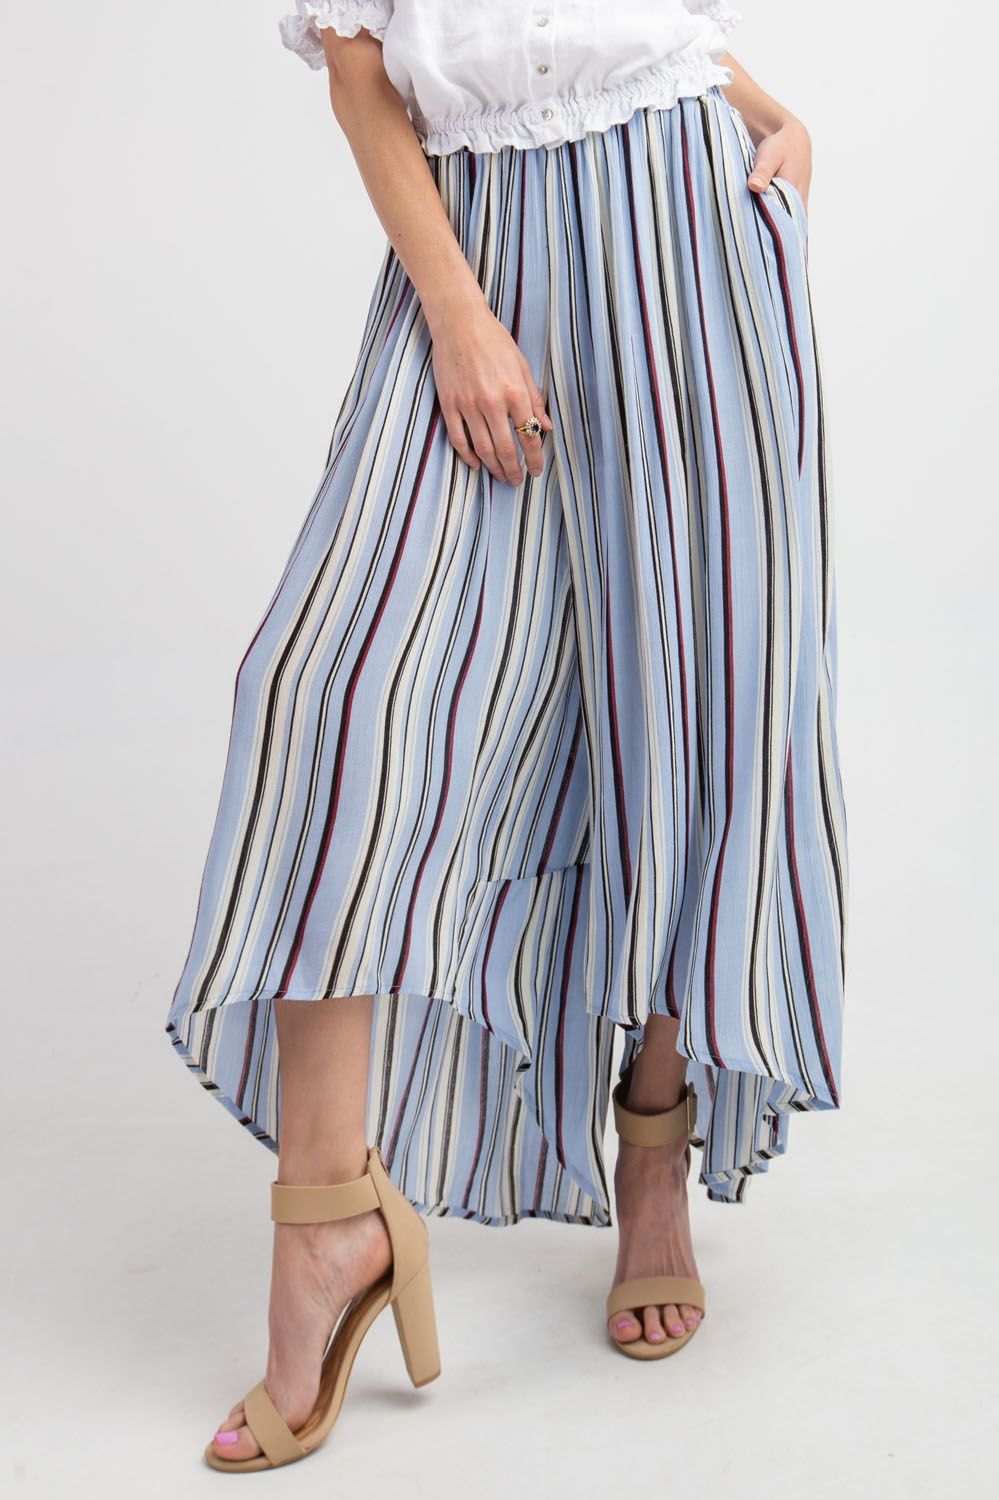 Easel Elastic Waistband Stripe Printed Rayon Gauze Ruffle Pants by Sensual Fashion Boutique